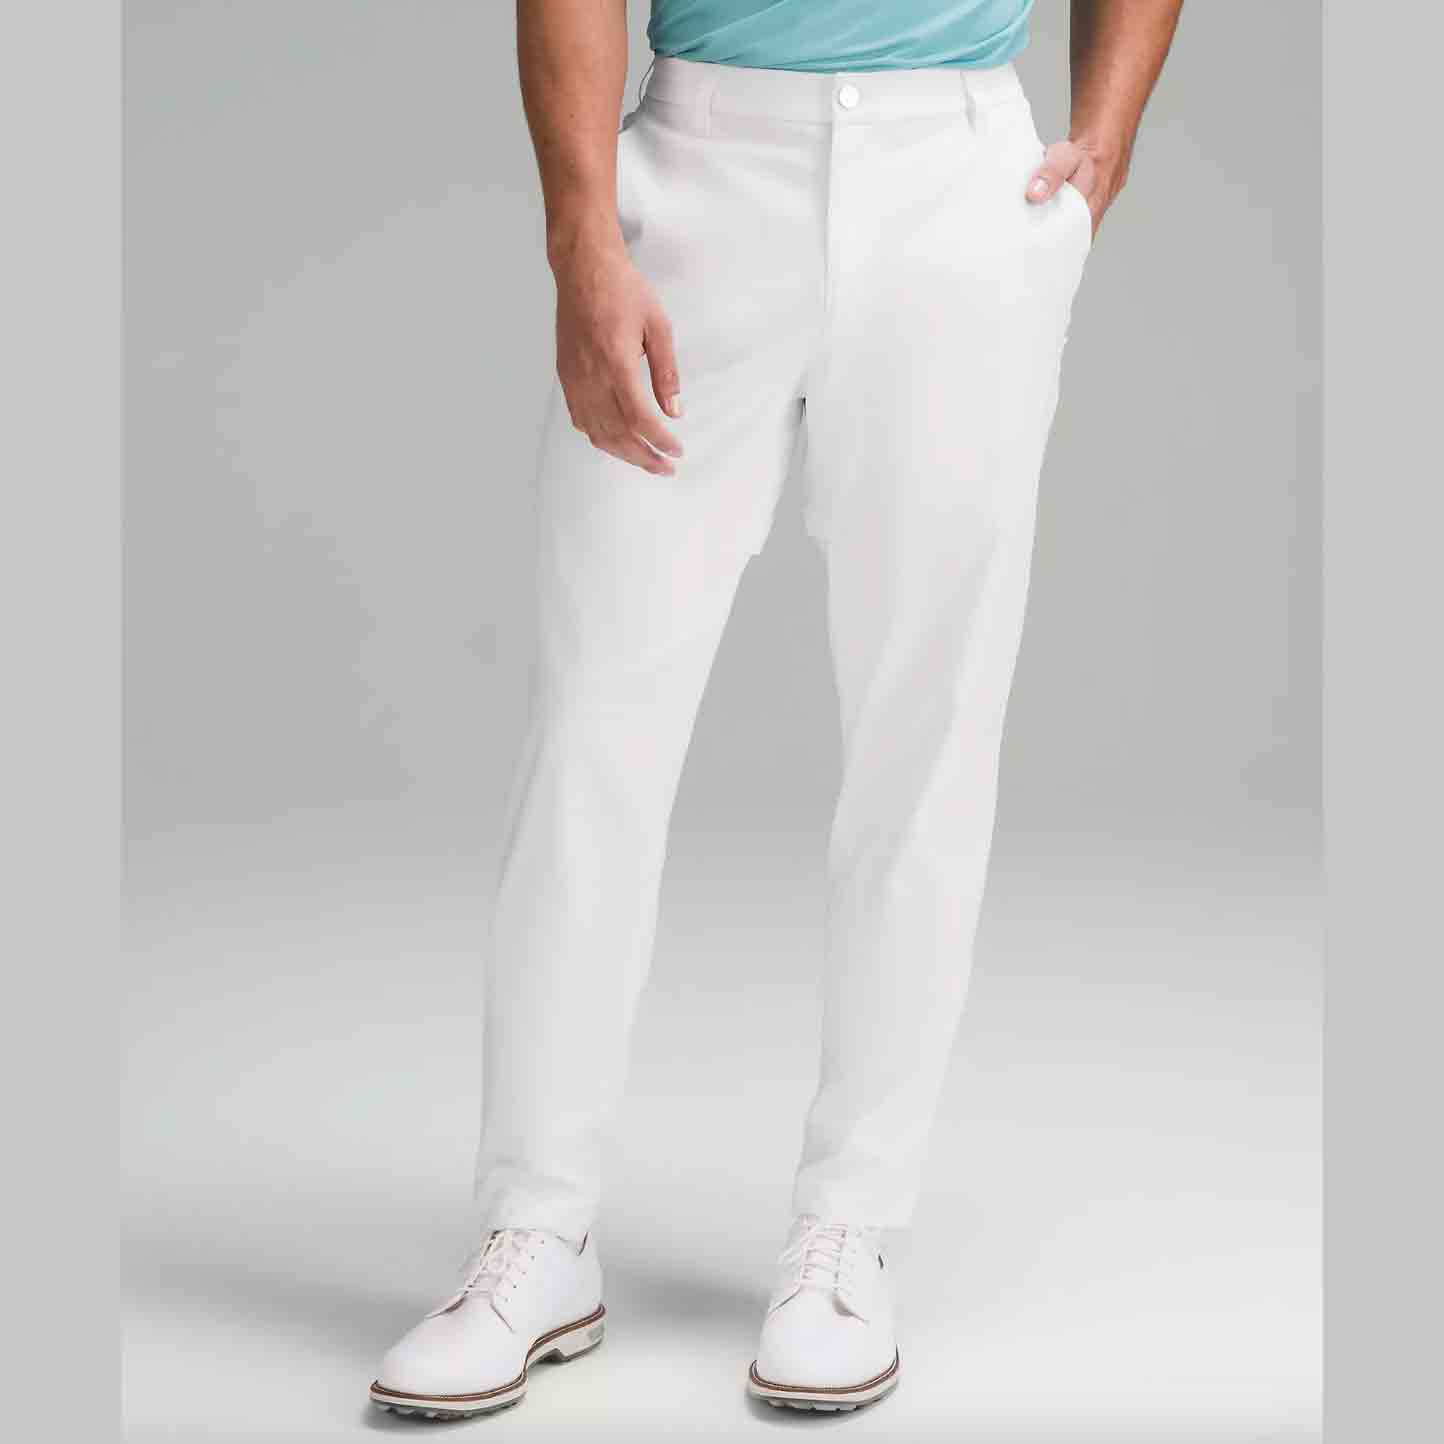 JL1 - White/Camo | Men's Golf Shoes – Duca del Cosma US